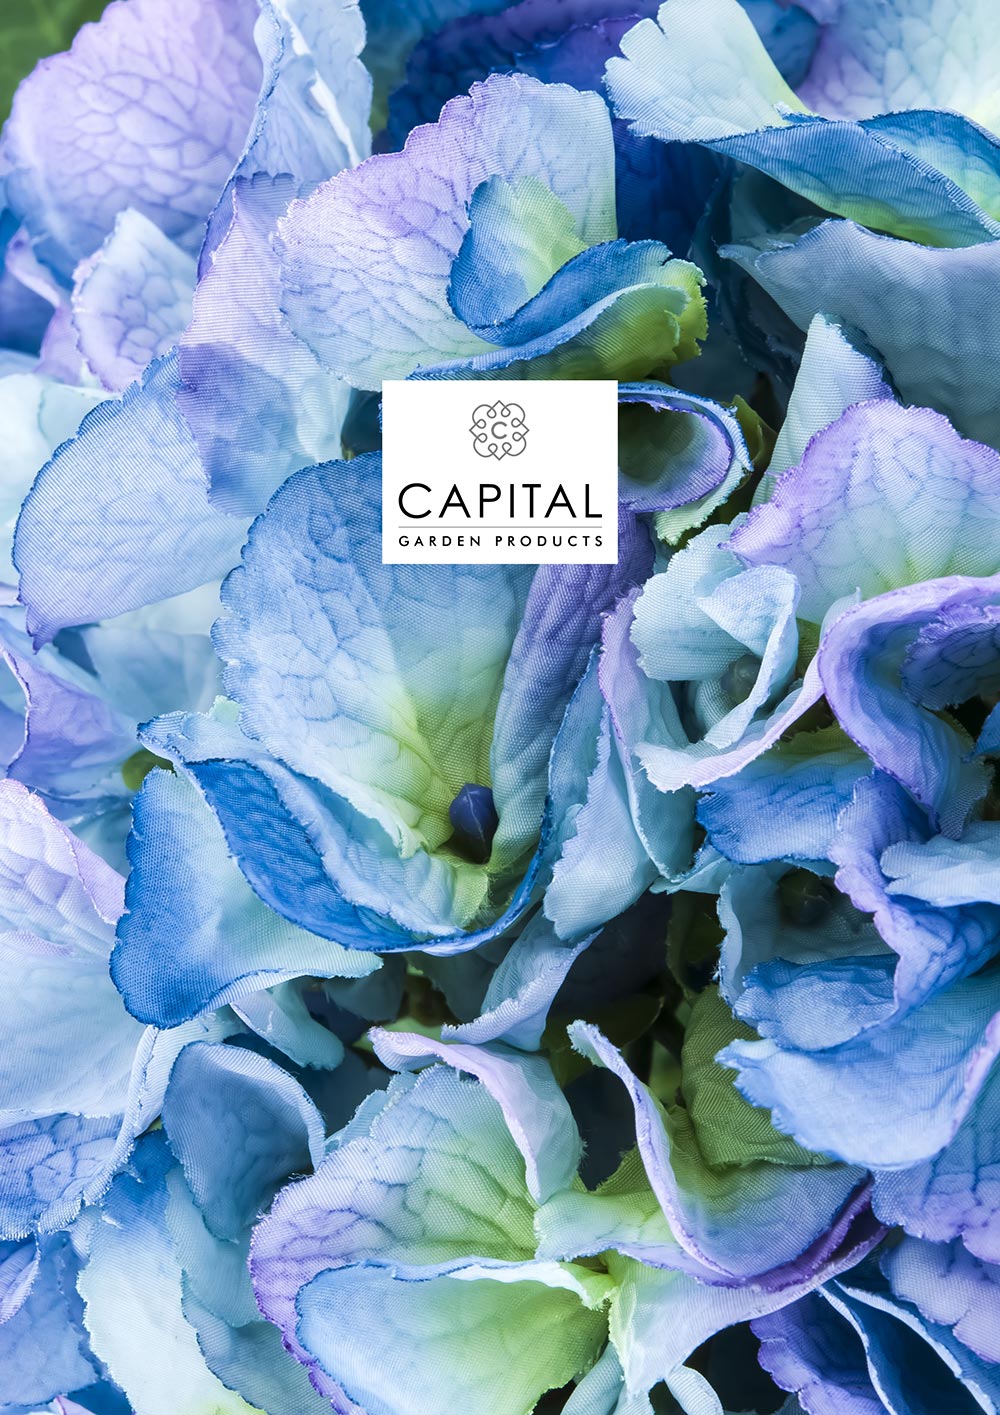 Capital Garden Products Plants Catalogue